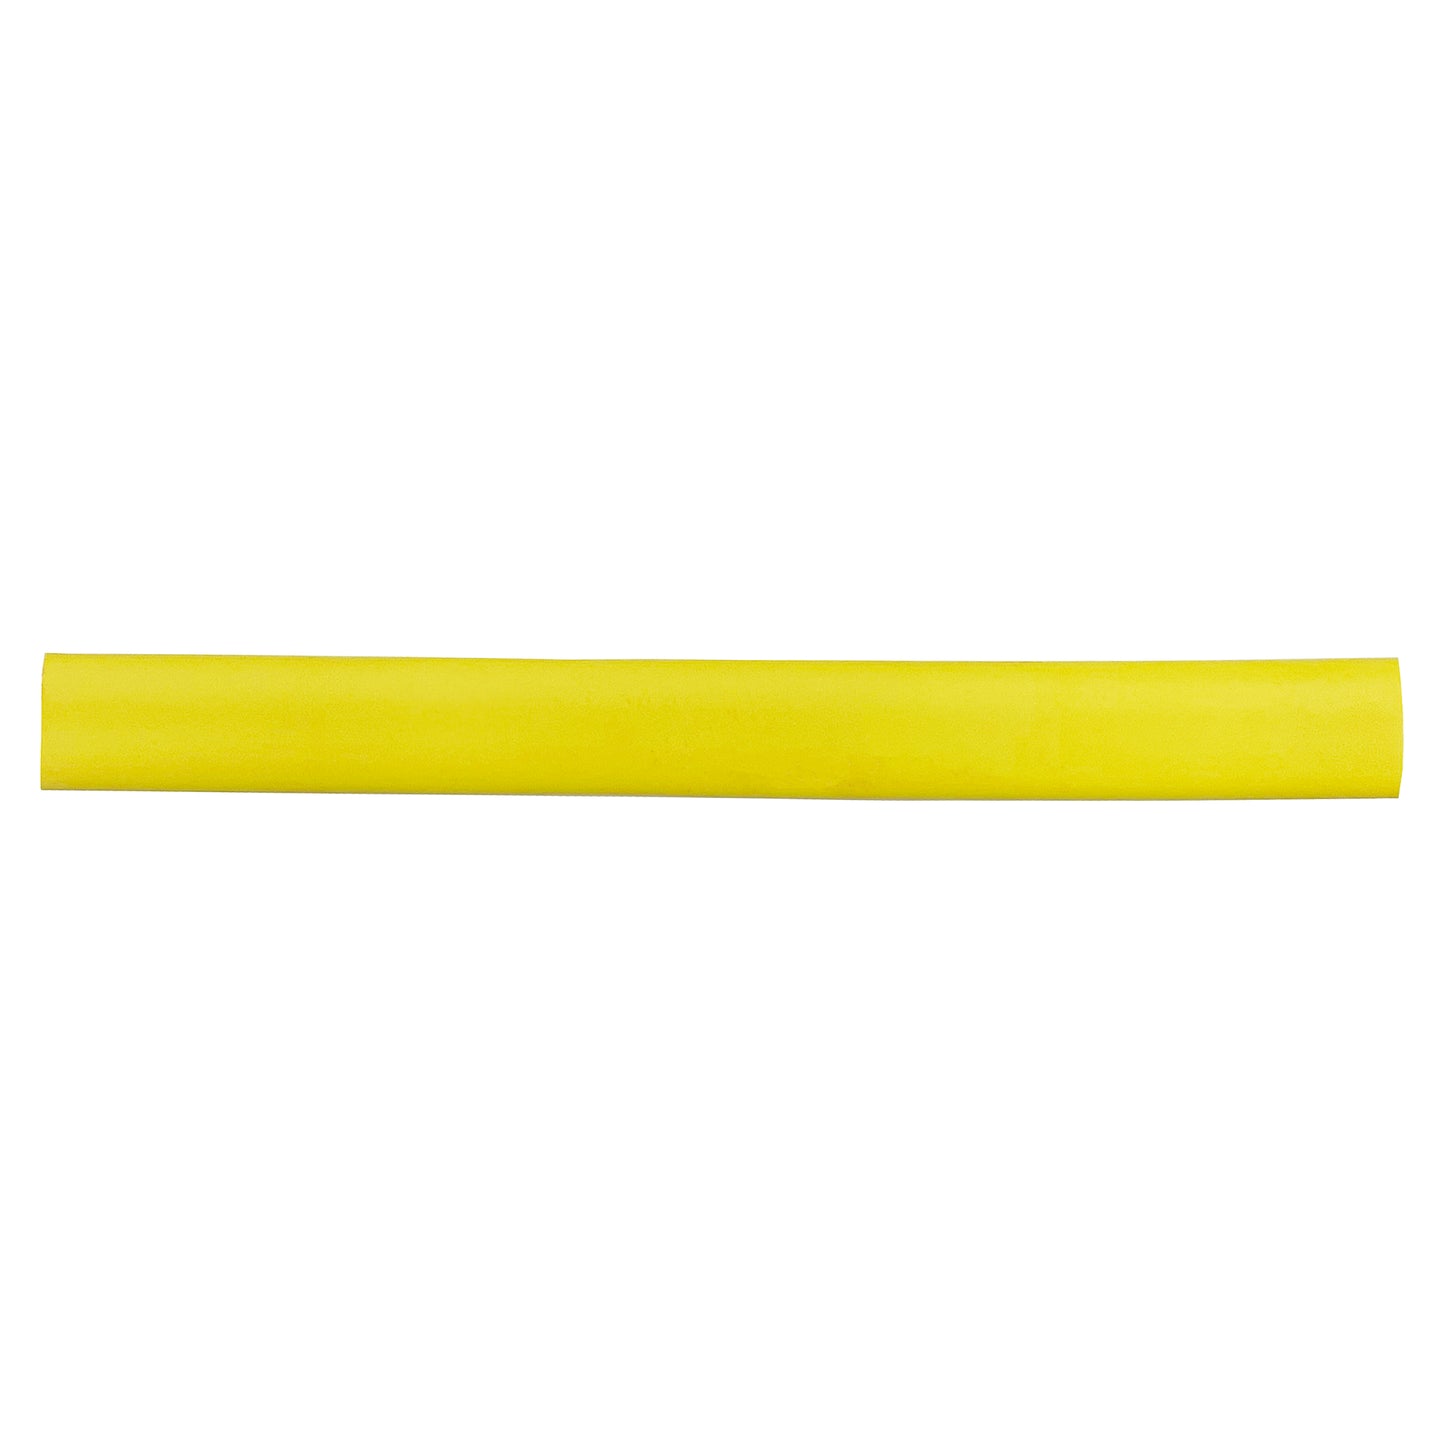 Flexible Thin Single Wall Non-Adhesive Heat Shrink Tubing 2:1 Yellow 3/8" ID - 100' Ft Spool